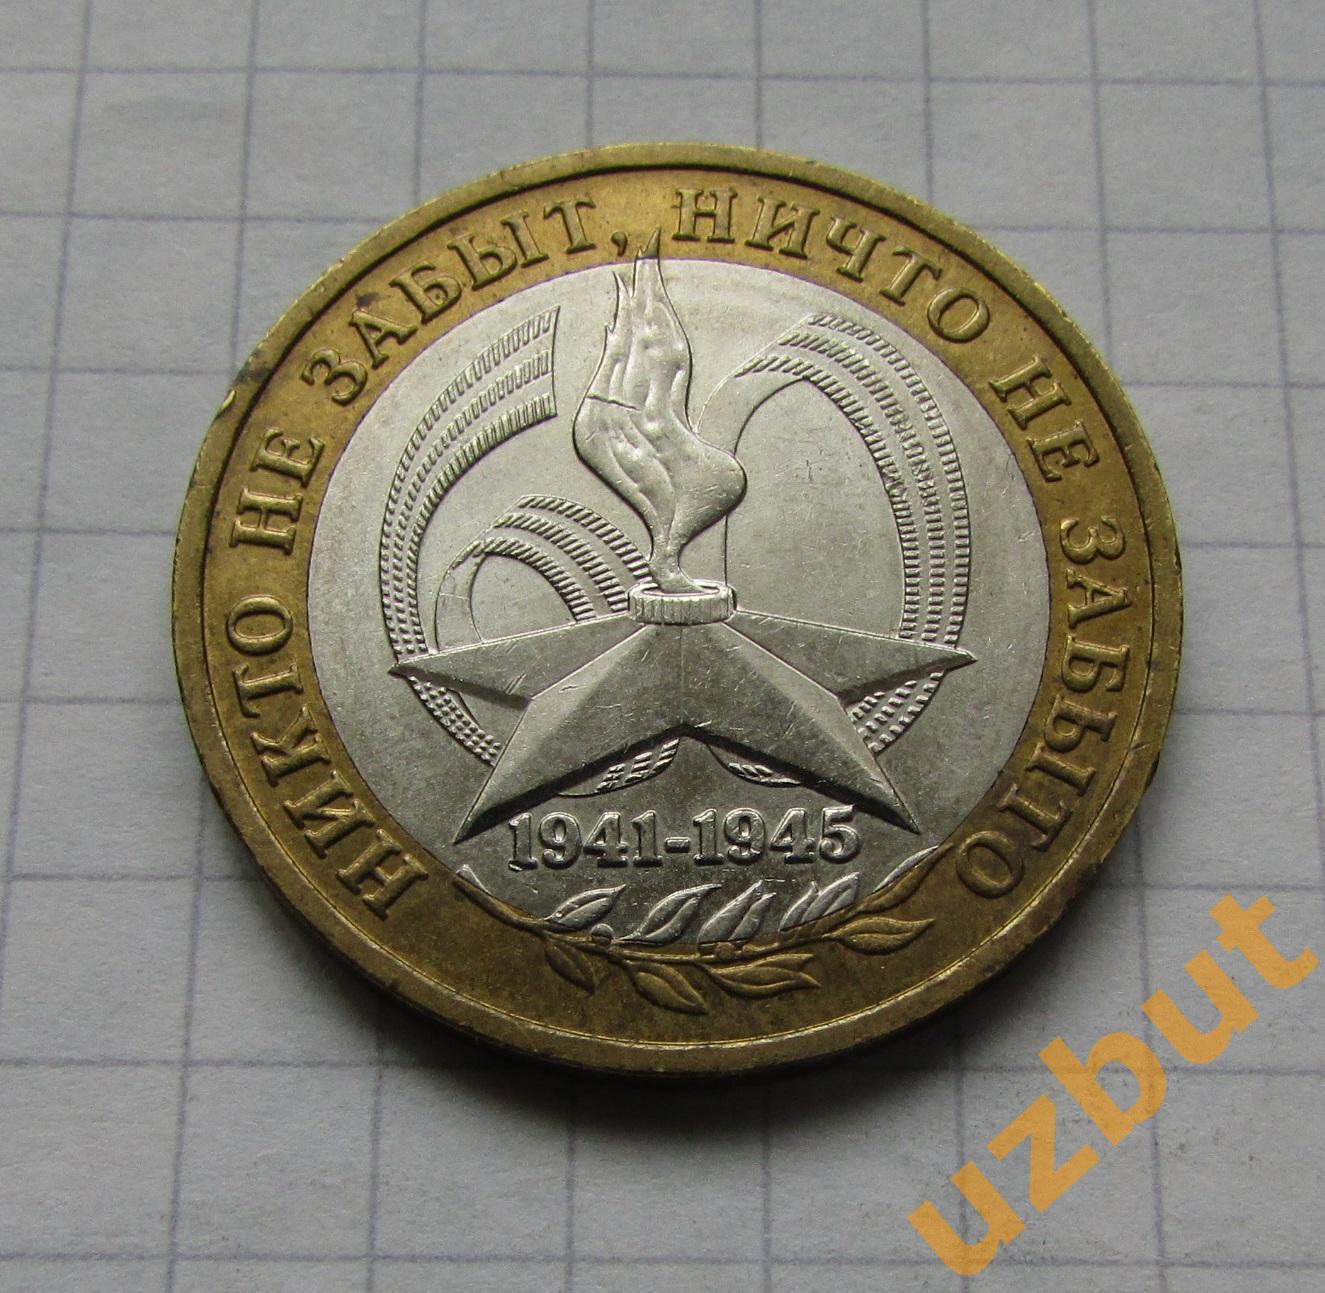 10 рублей РФ 2005 Победа 60 лет ммд (2)